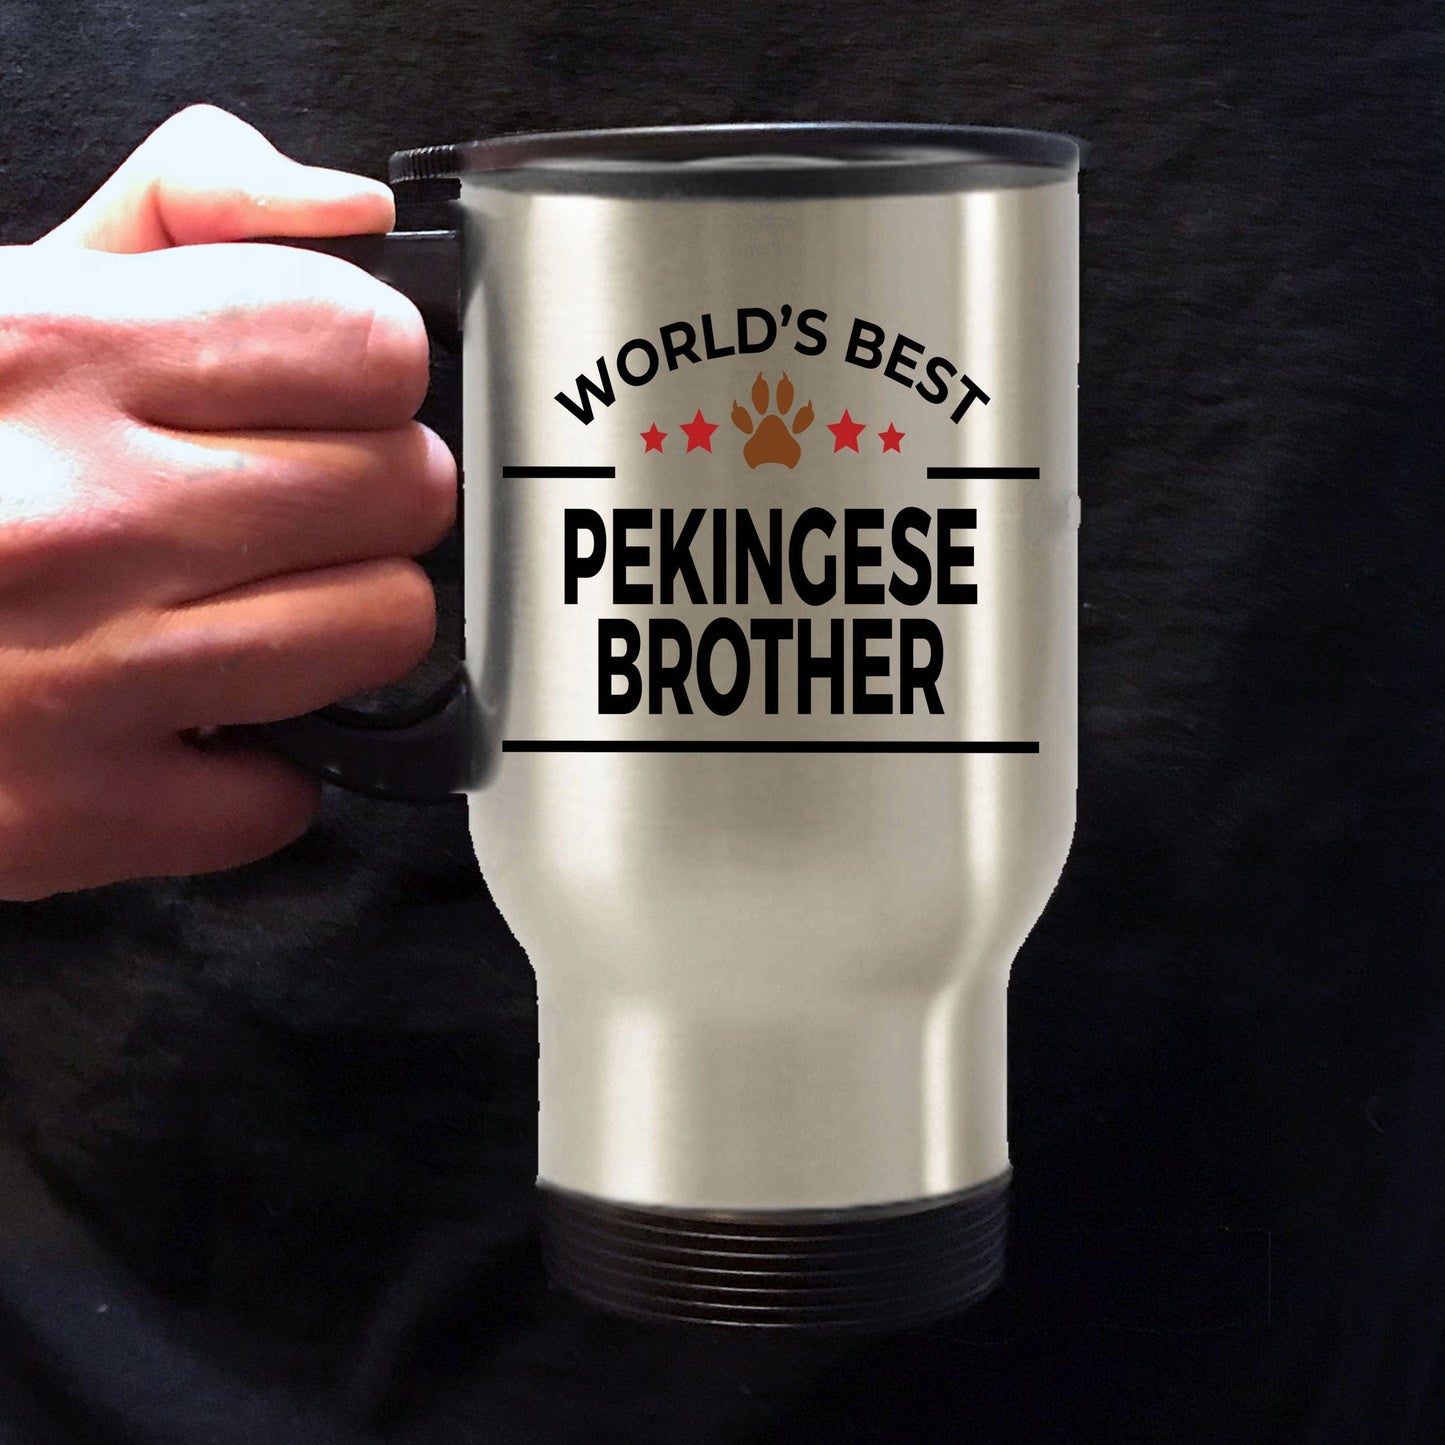 Pekingese Dog Lover Gift World's Best Brother Birthday Stainless Steel Insulated Travel Coffee Mug